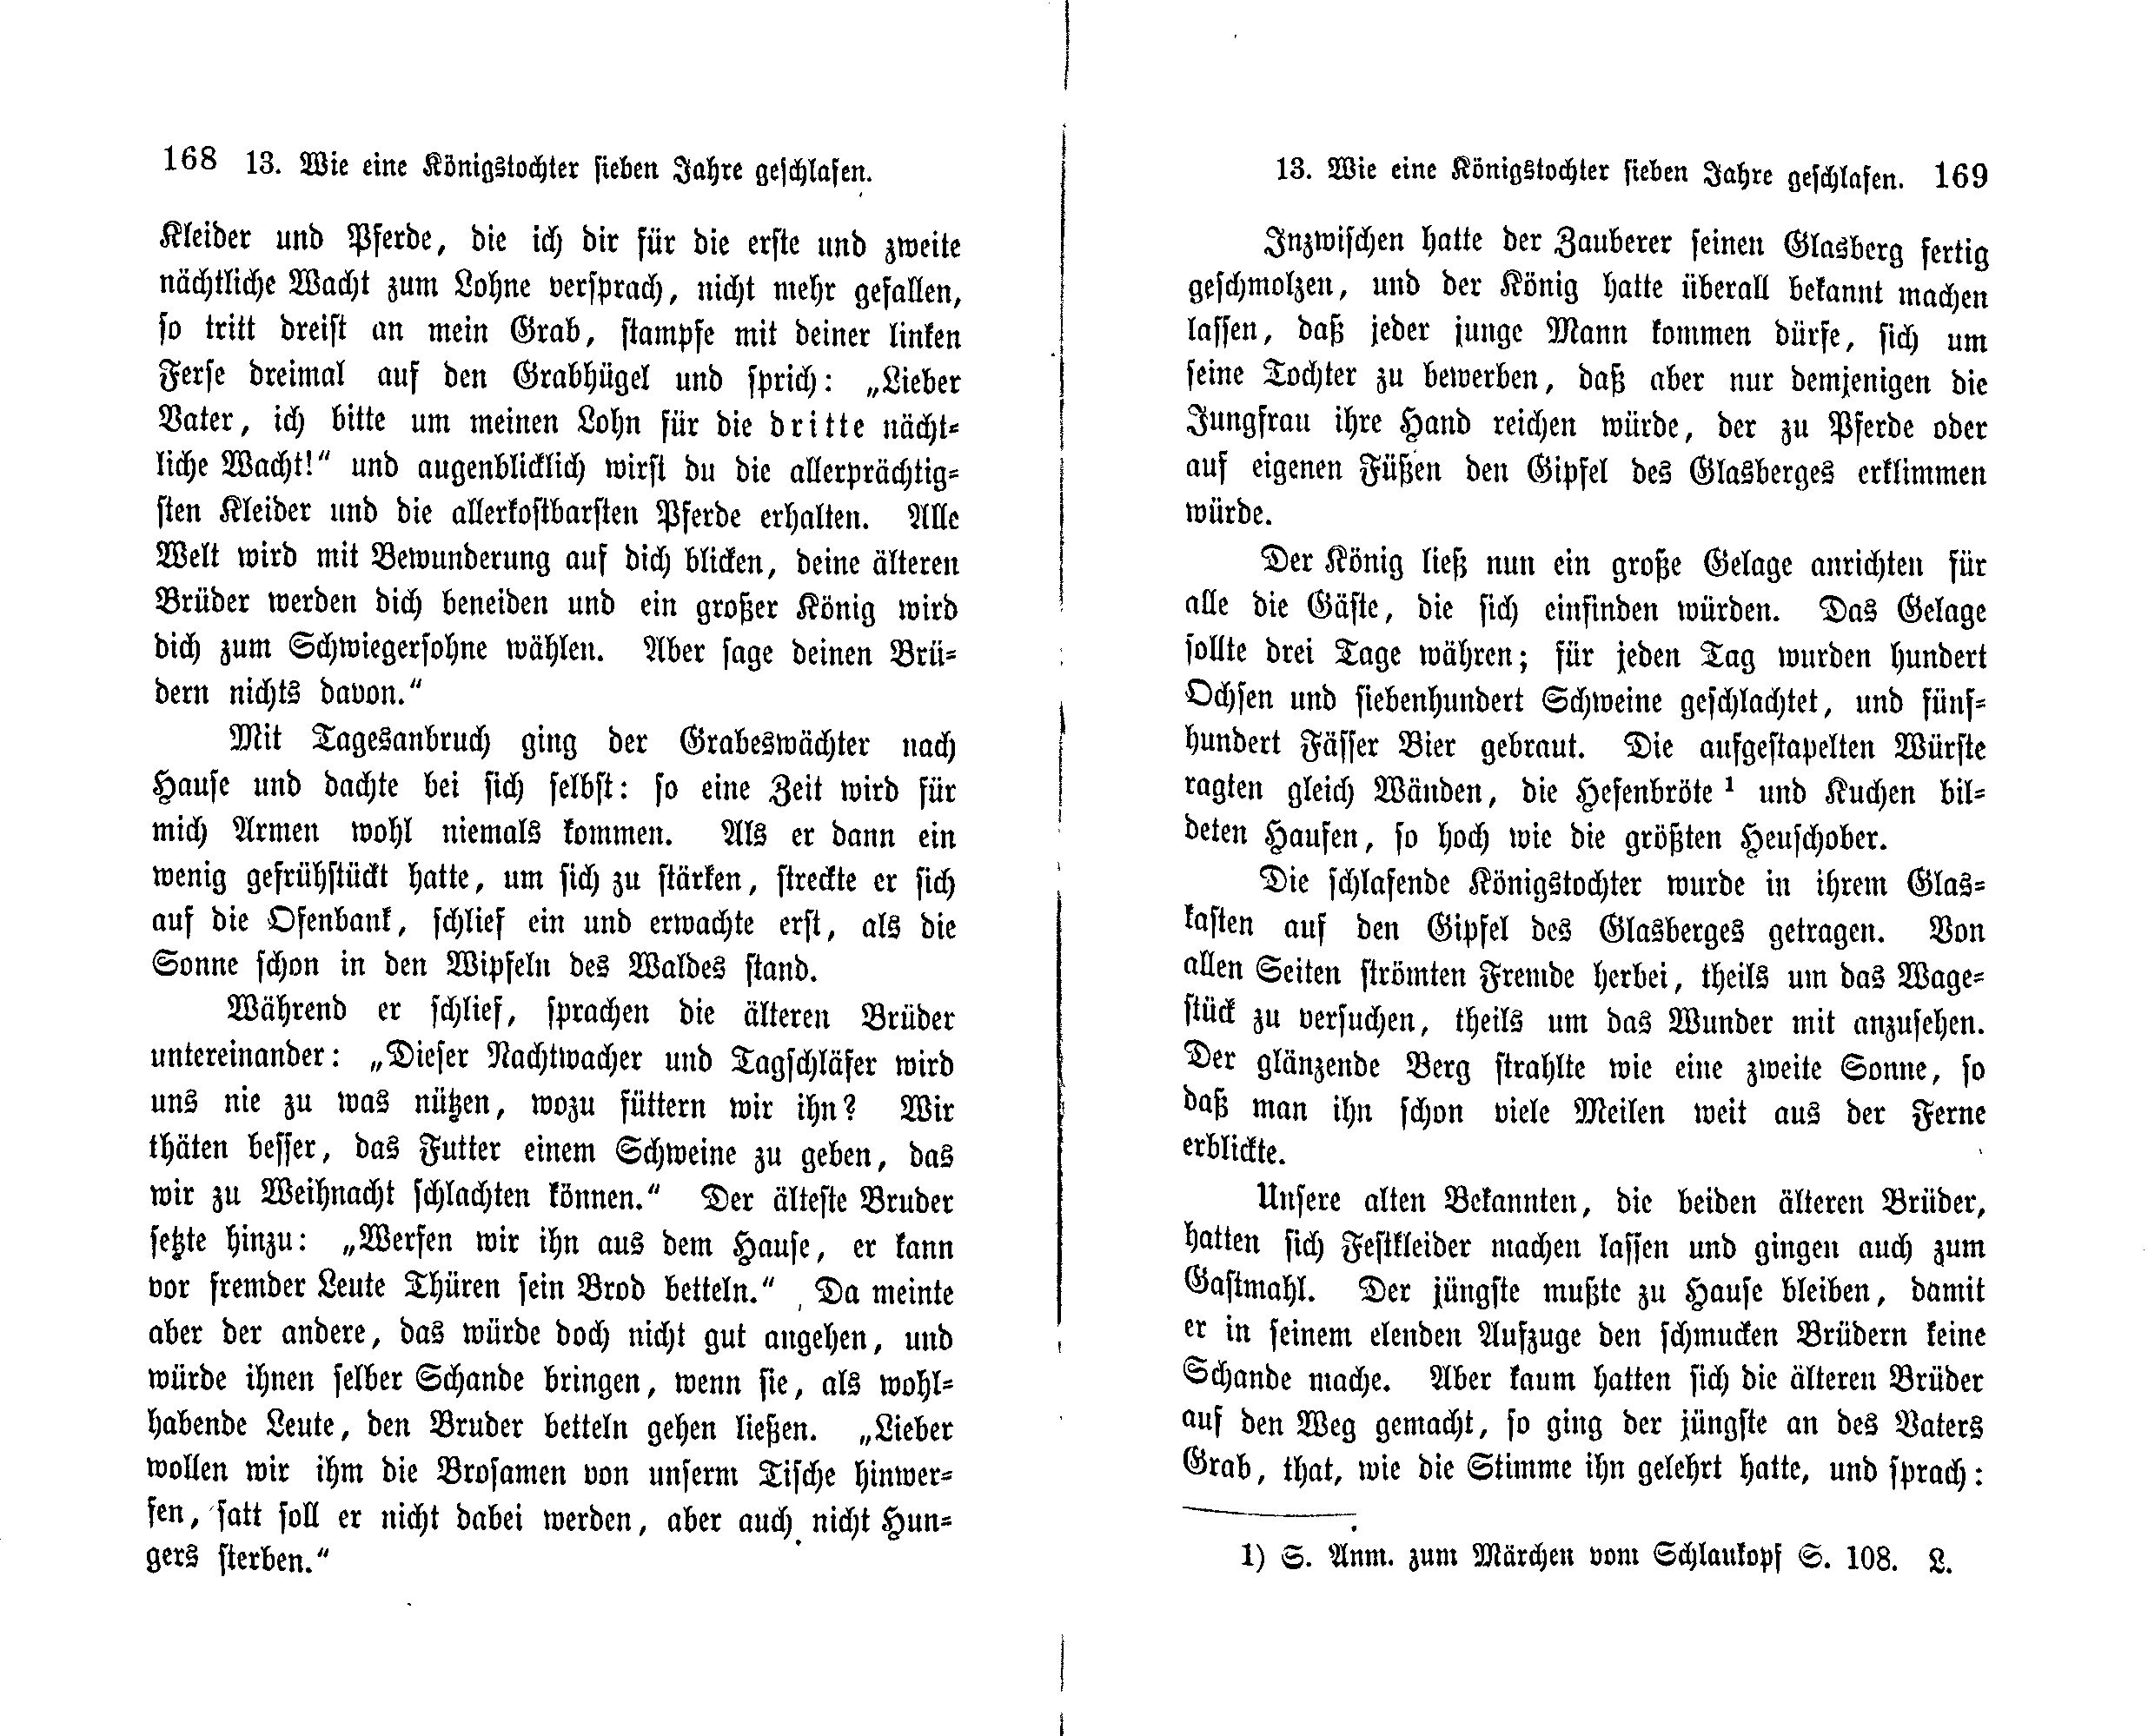 Estnische Märchen [1] (1869) | 89. (168-169) Main body of text